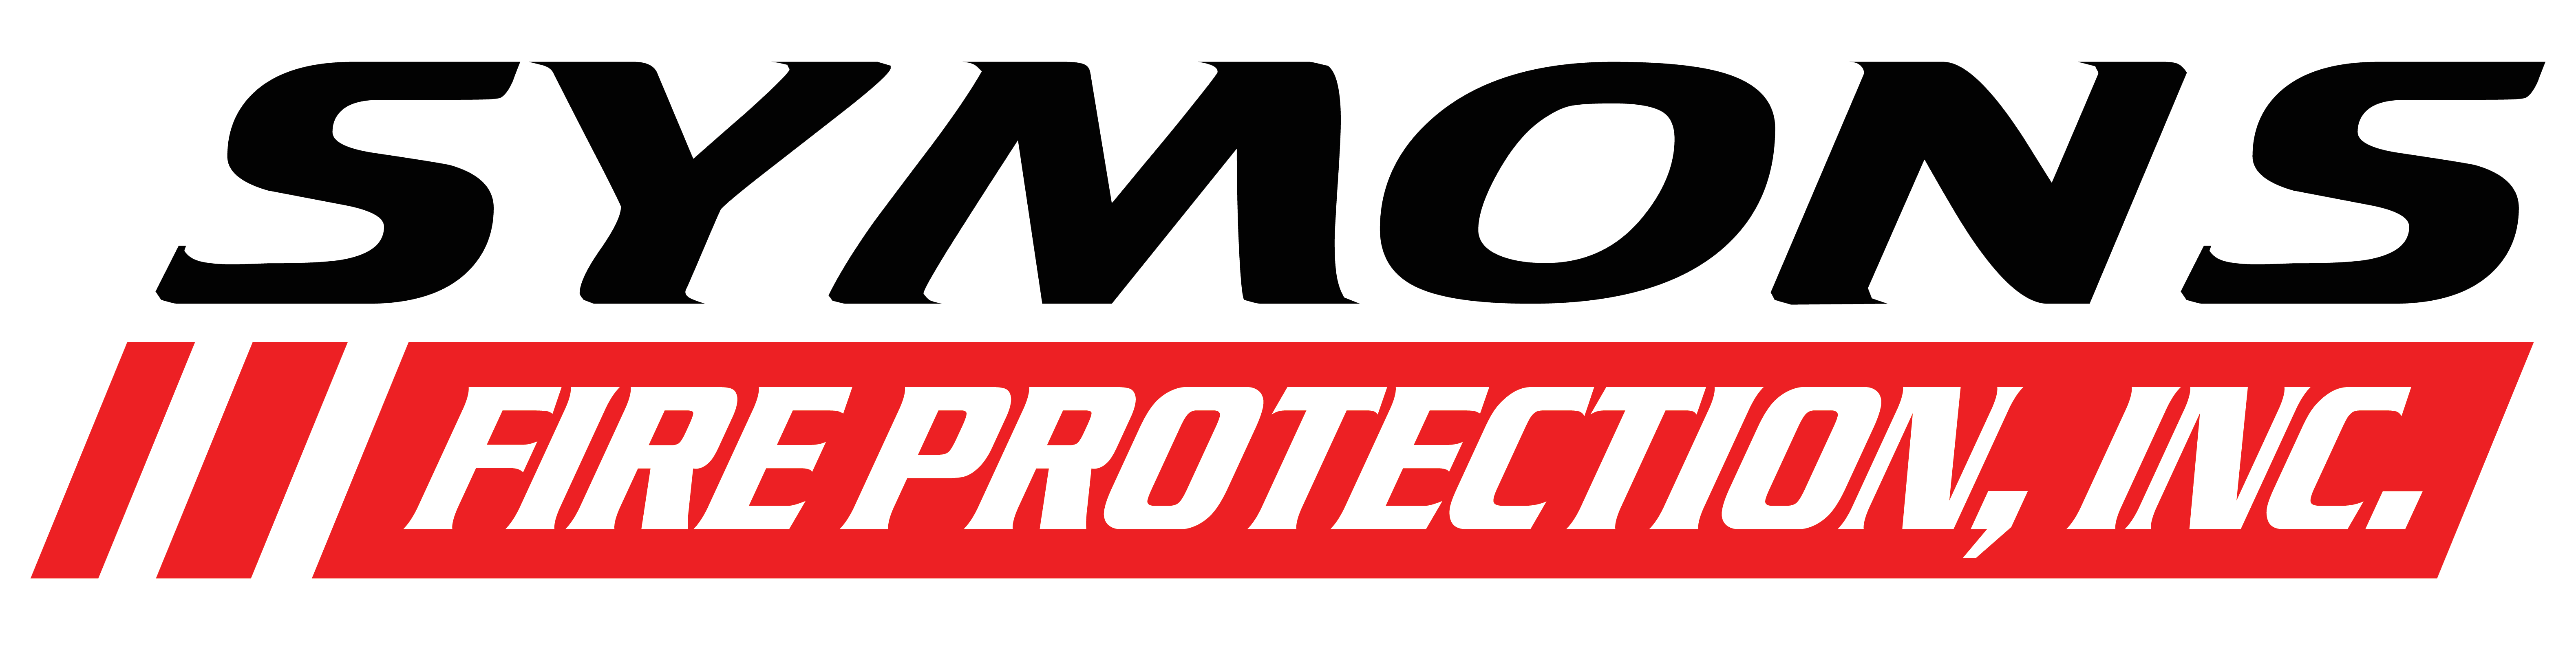 Symons Fire Protection, Inc. logo